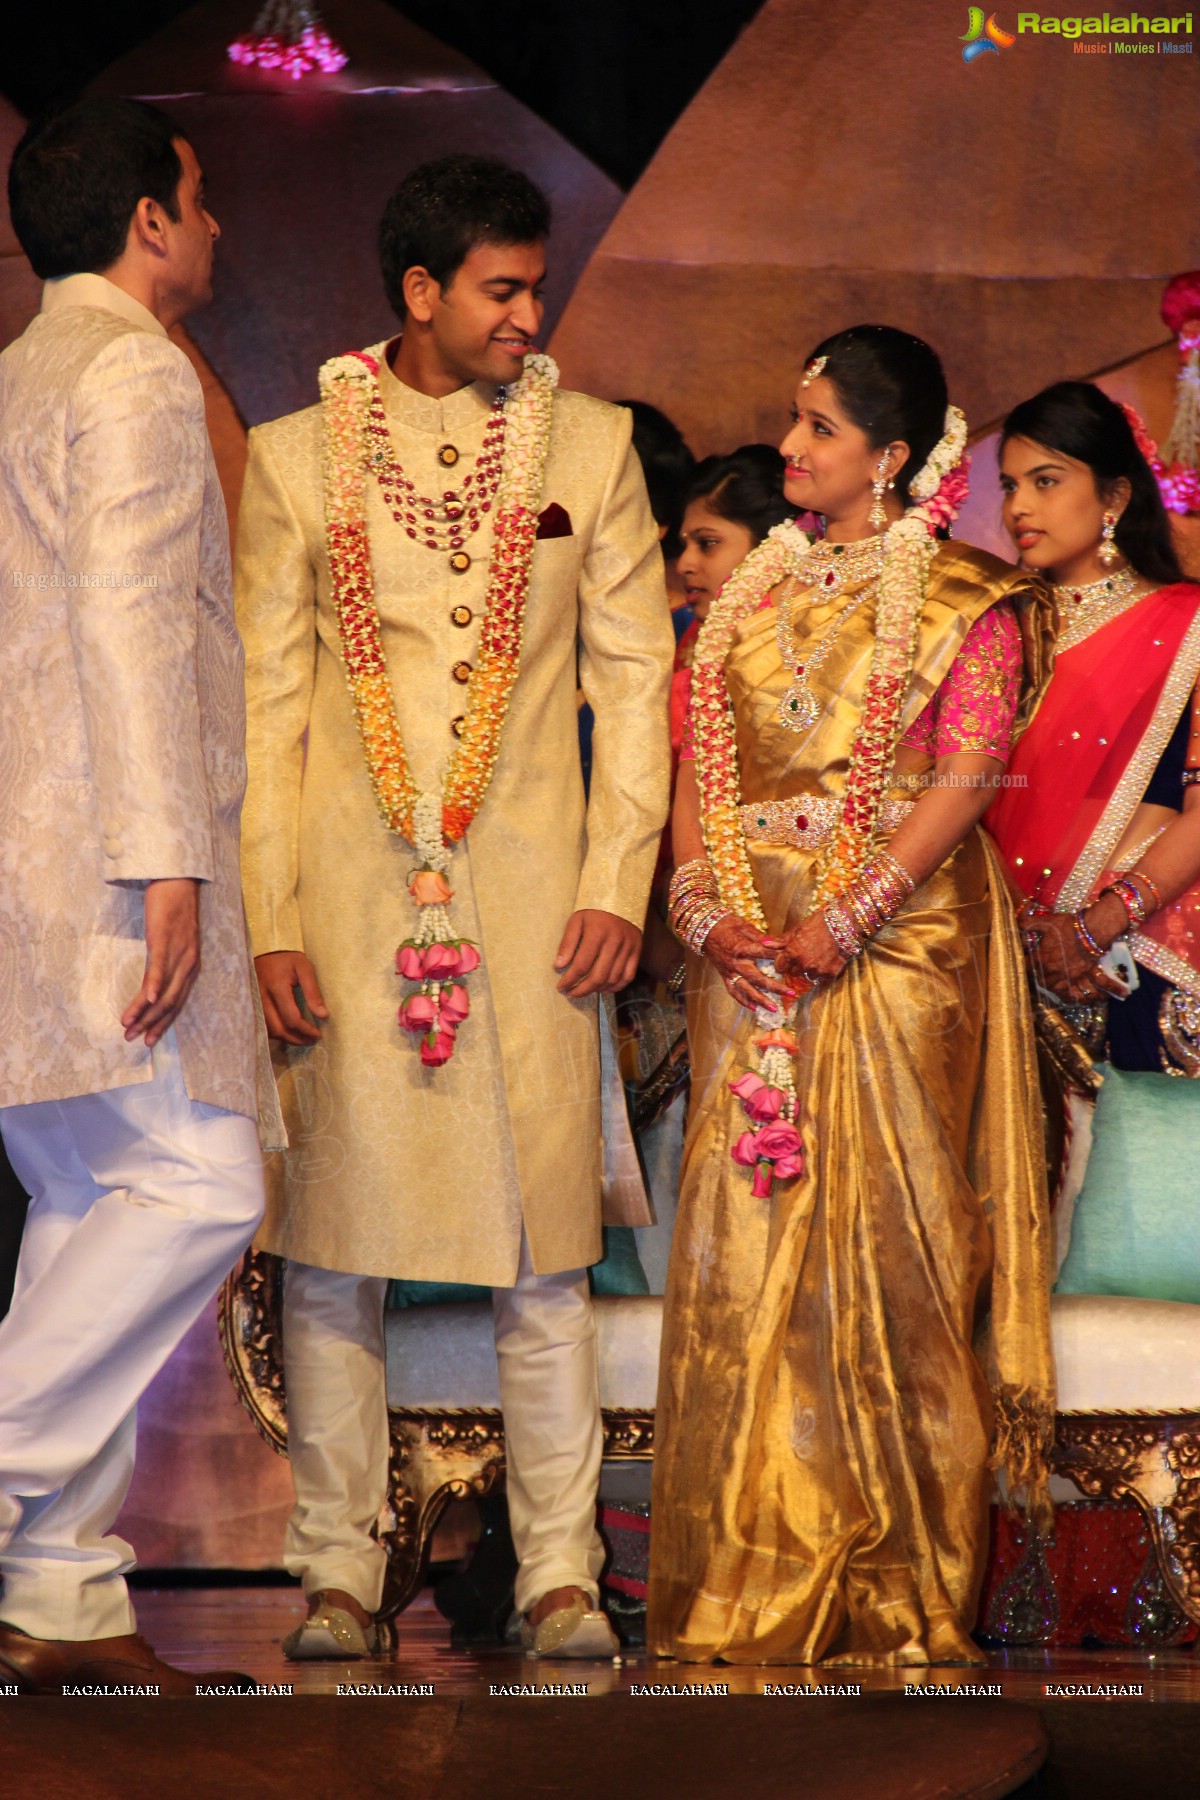 Dil Raju Daughter Hanshitha's Engagement